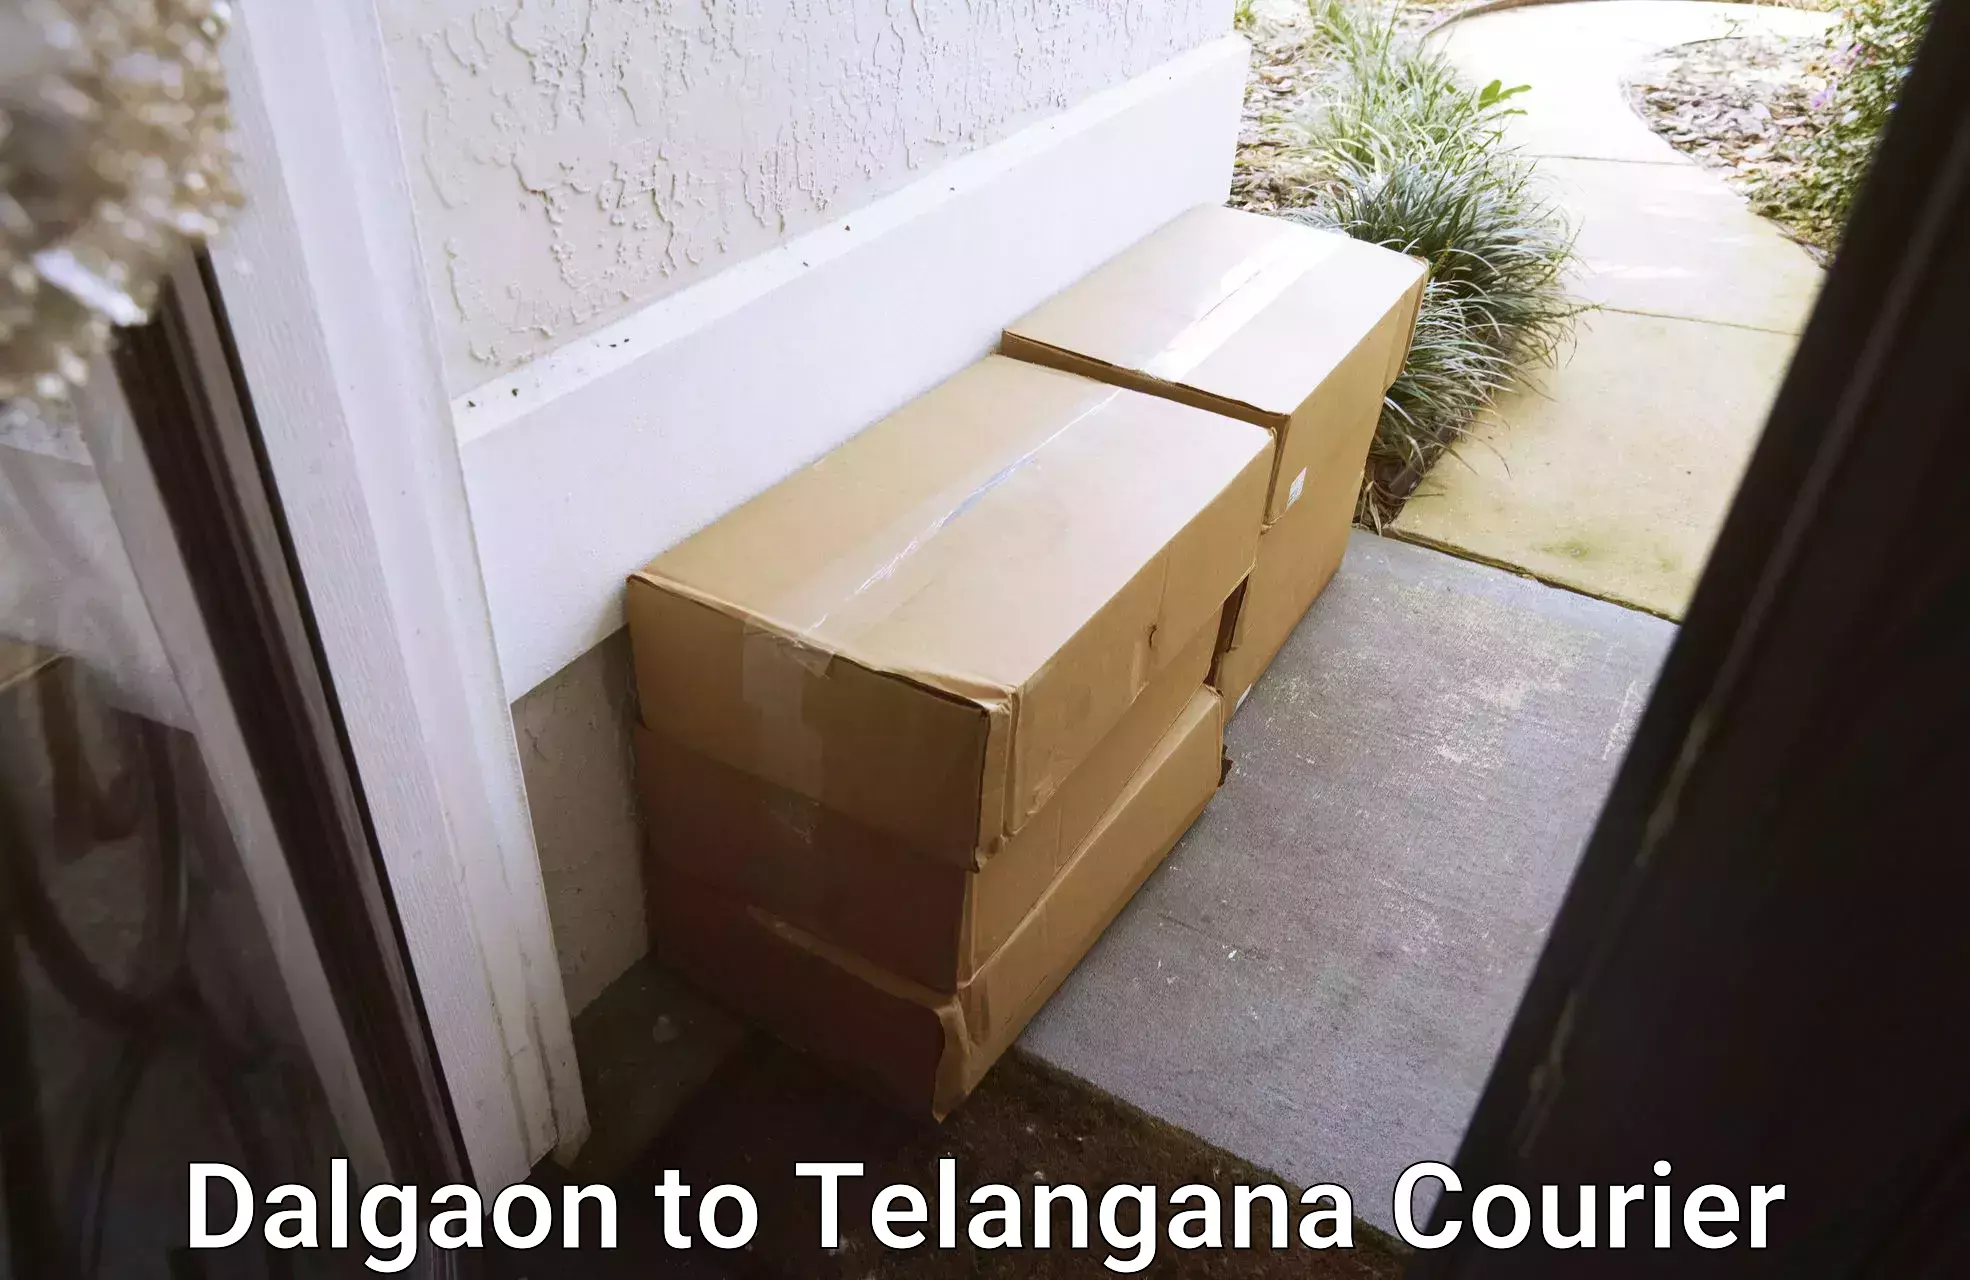 Courier service comparison Dalgaon to Telangana